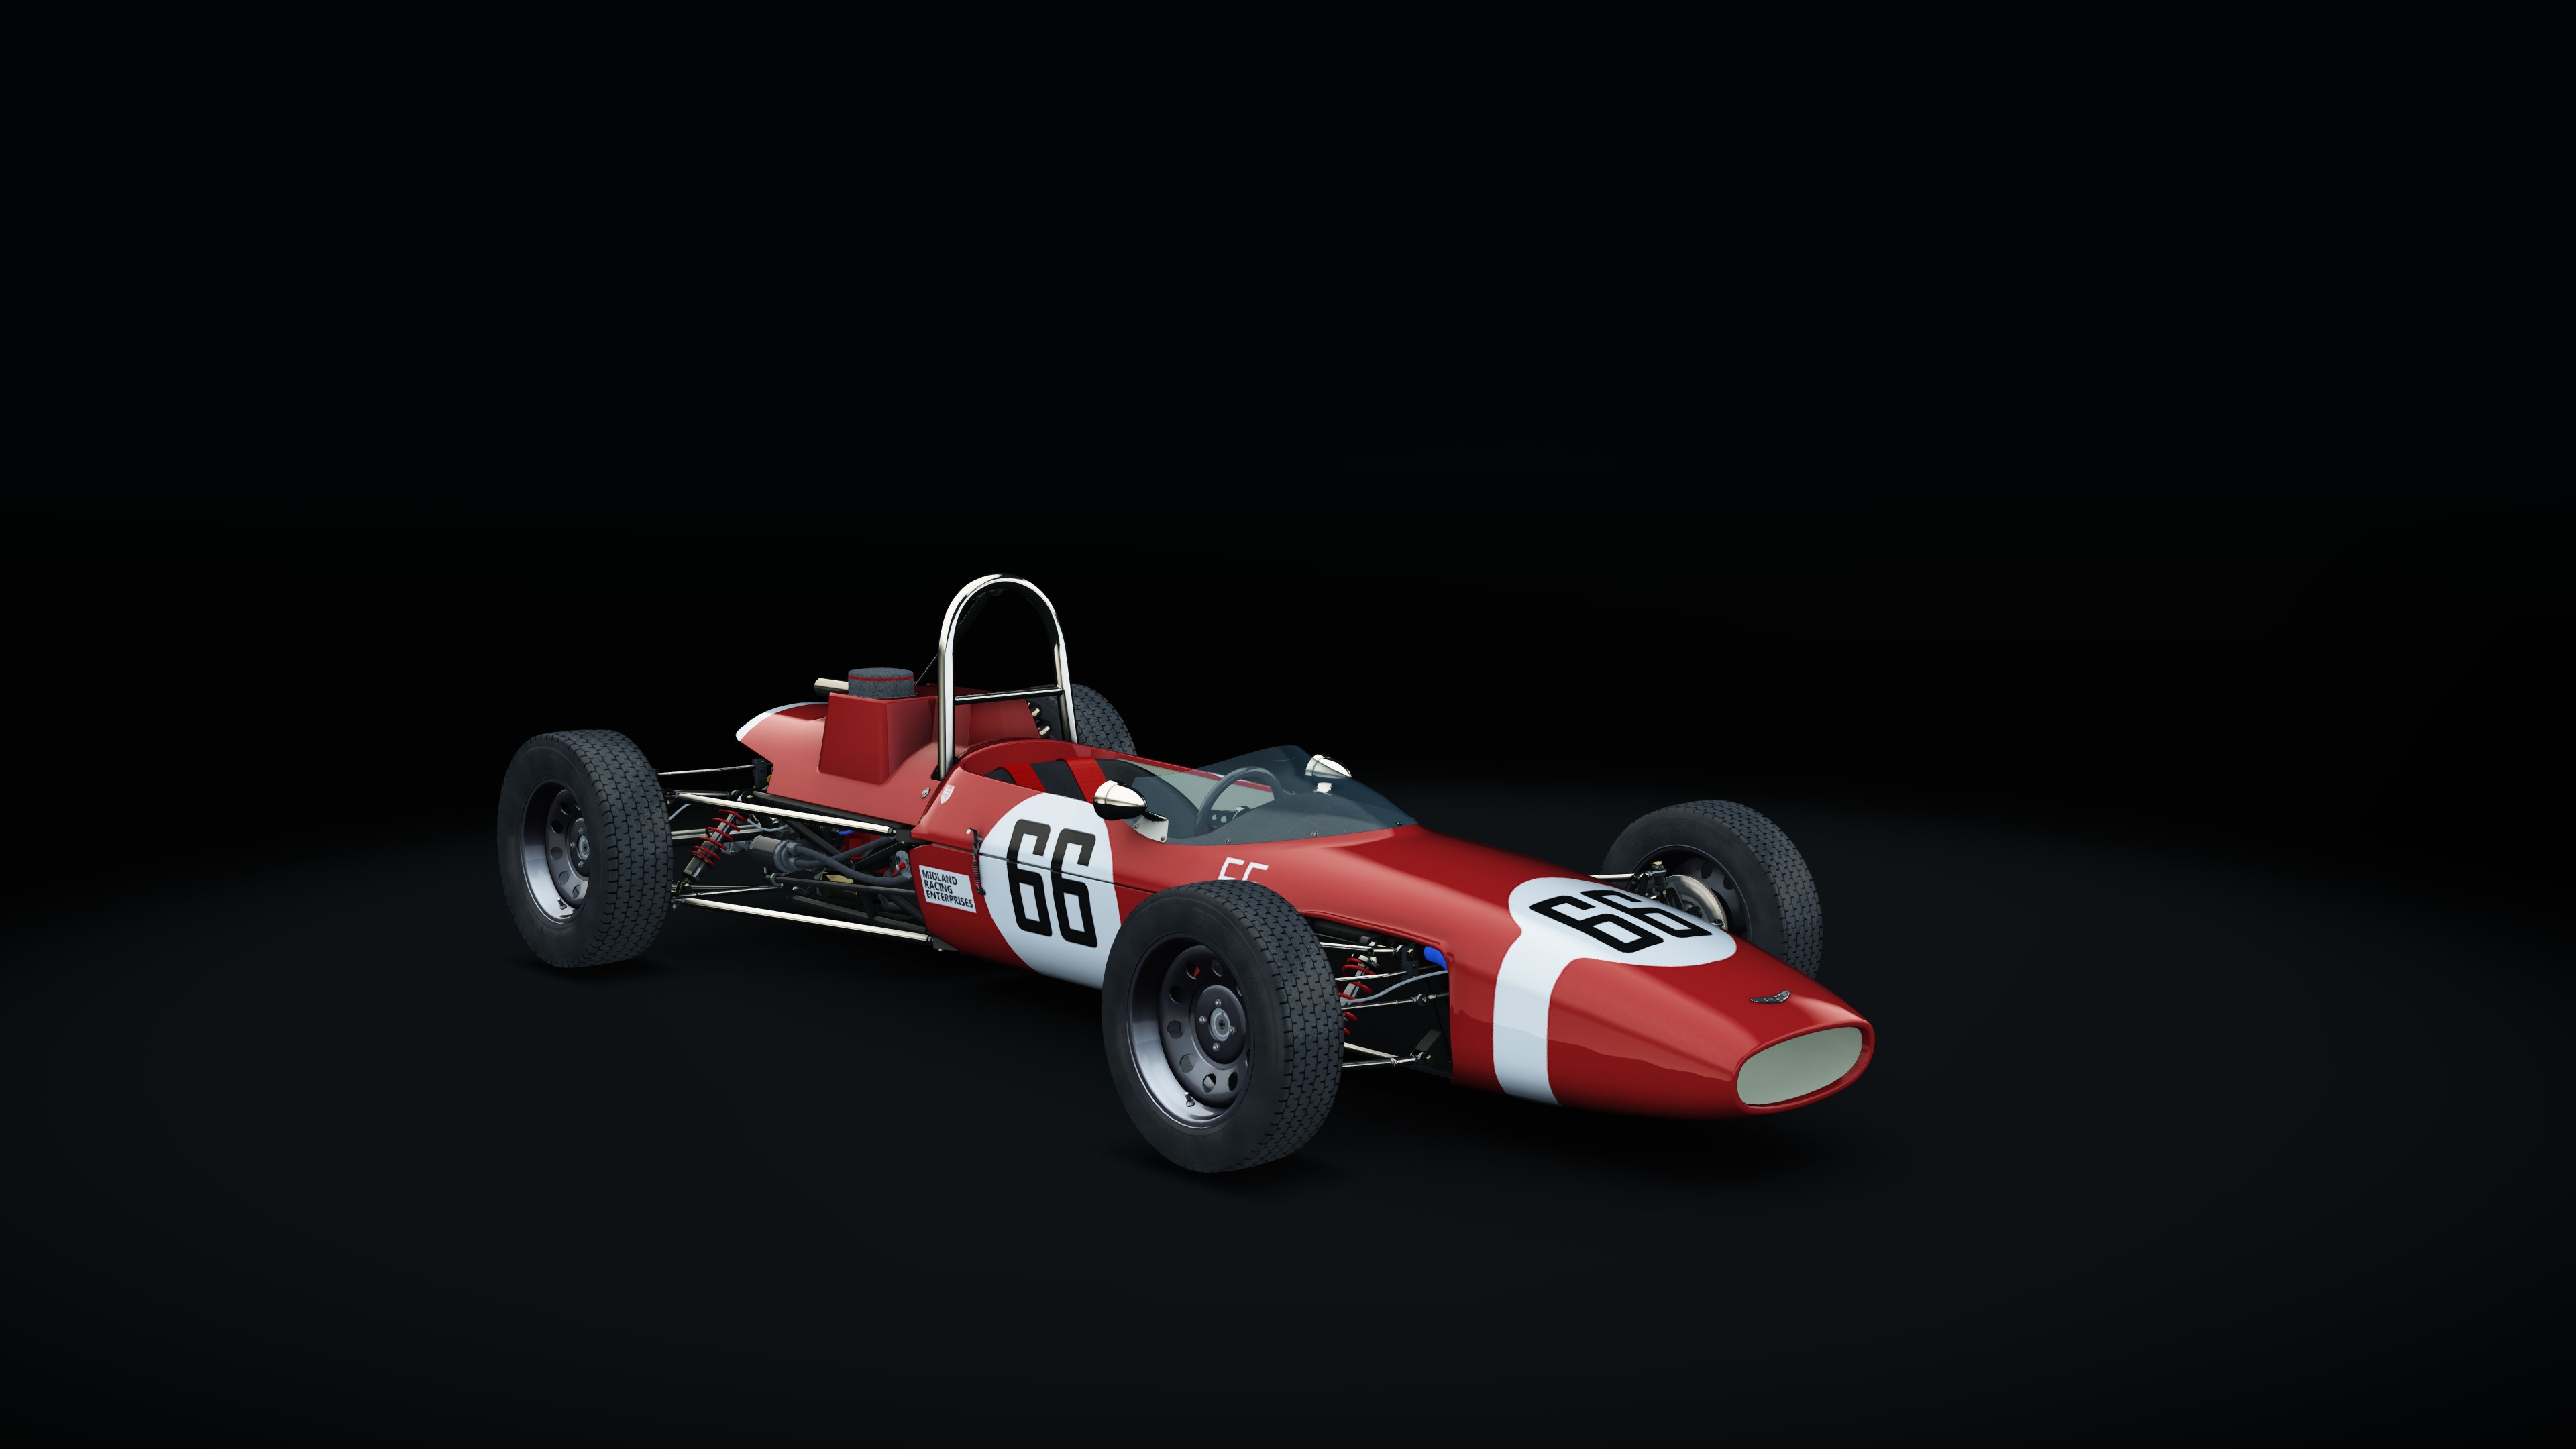 Russell-Alexis Mk. 14 Formula Ford, skin 66MDavidson